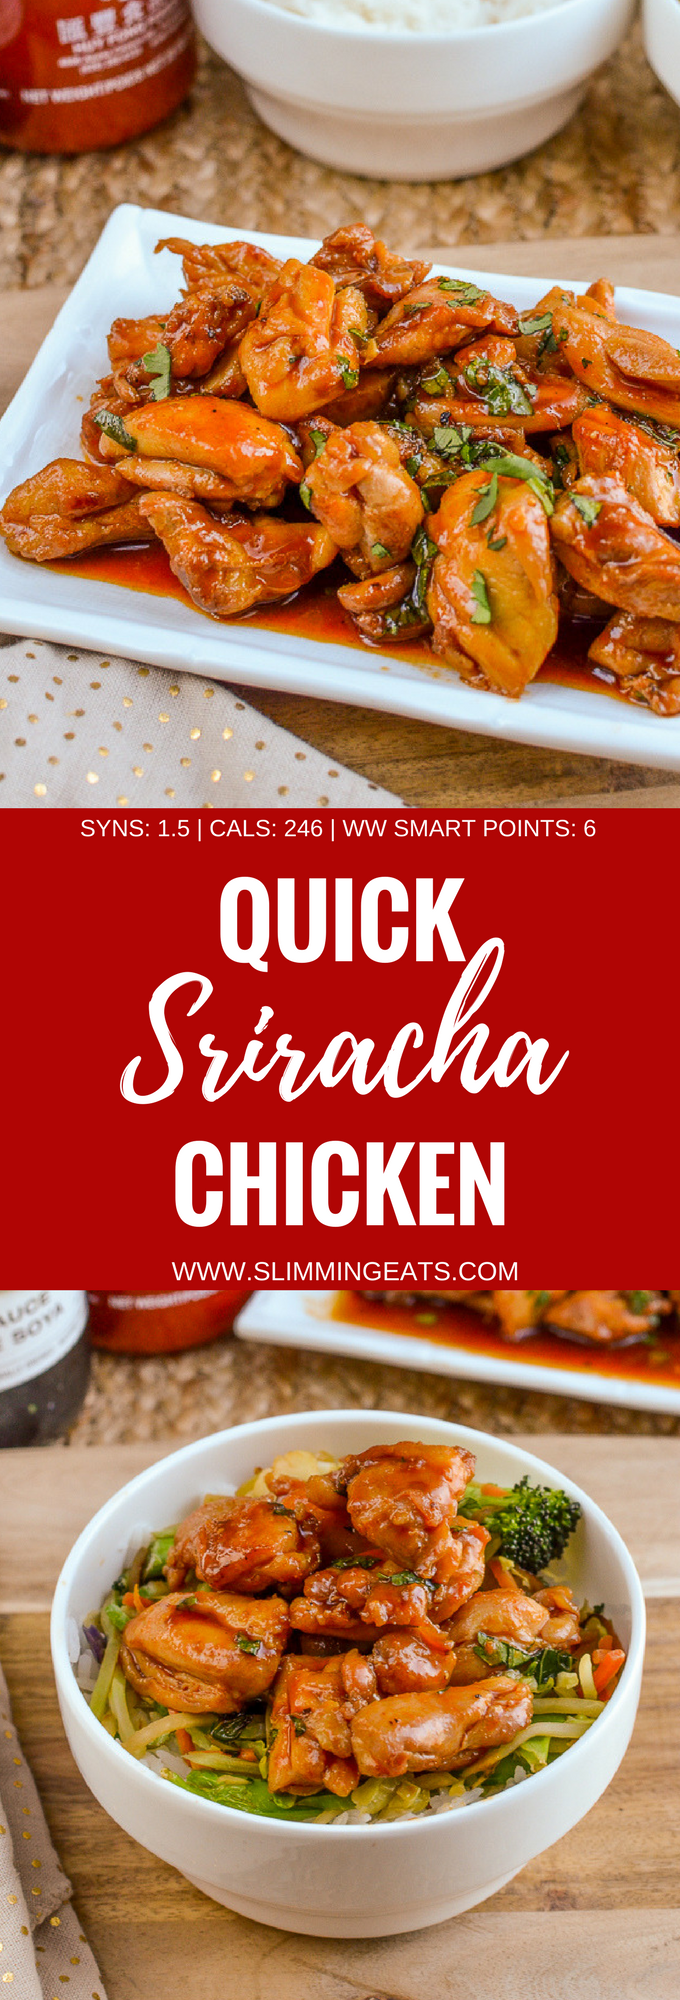 Slimming Eats Quick Sriracha Chicken - gluten free, dairy free, Slimming World and Weight Watchers friendly